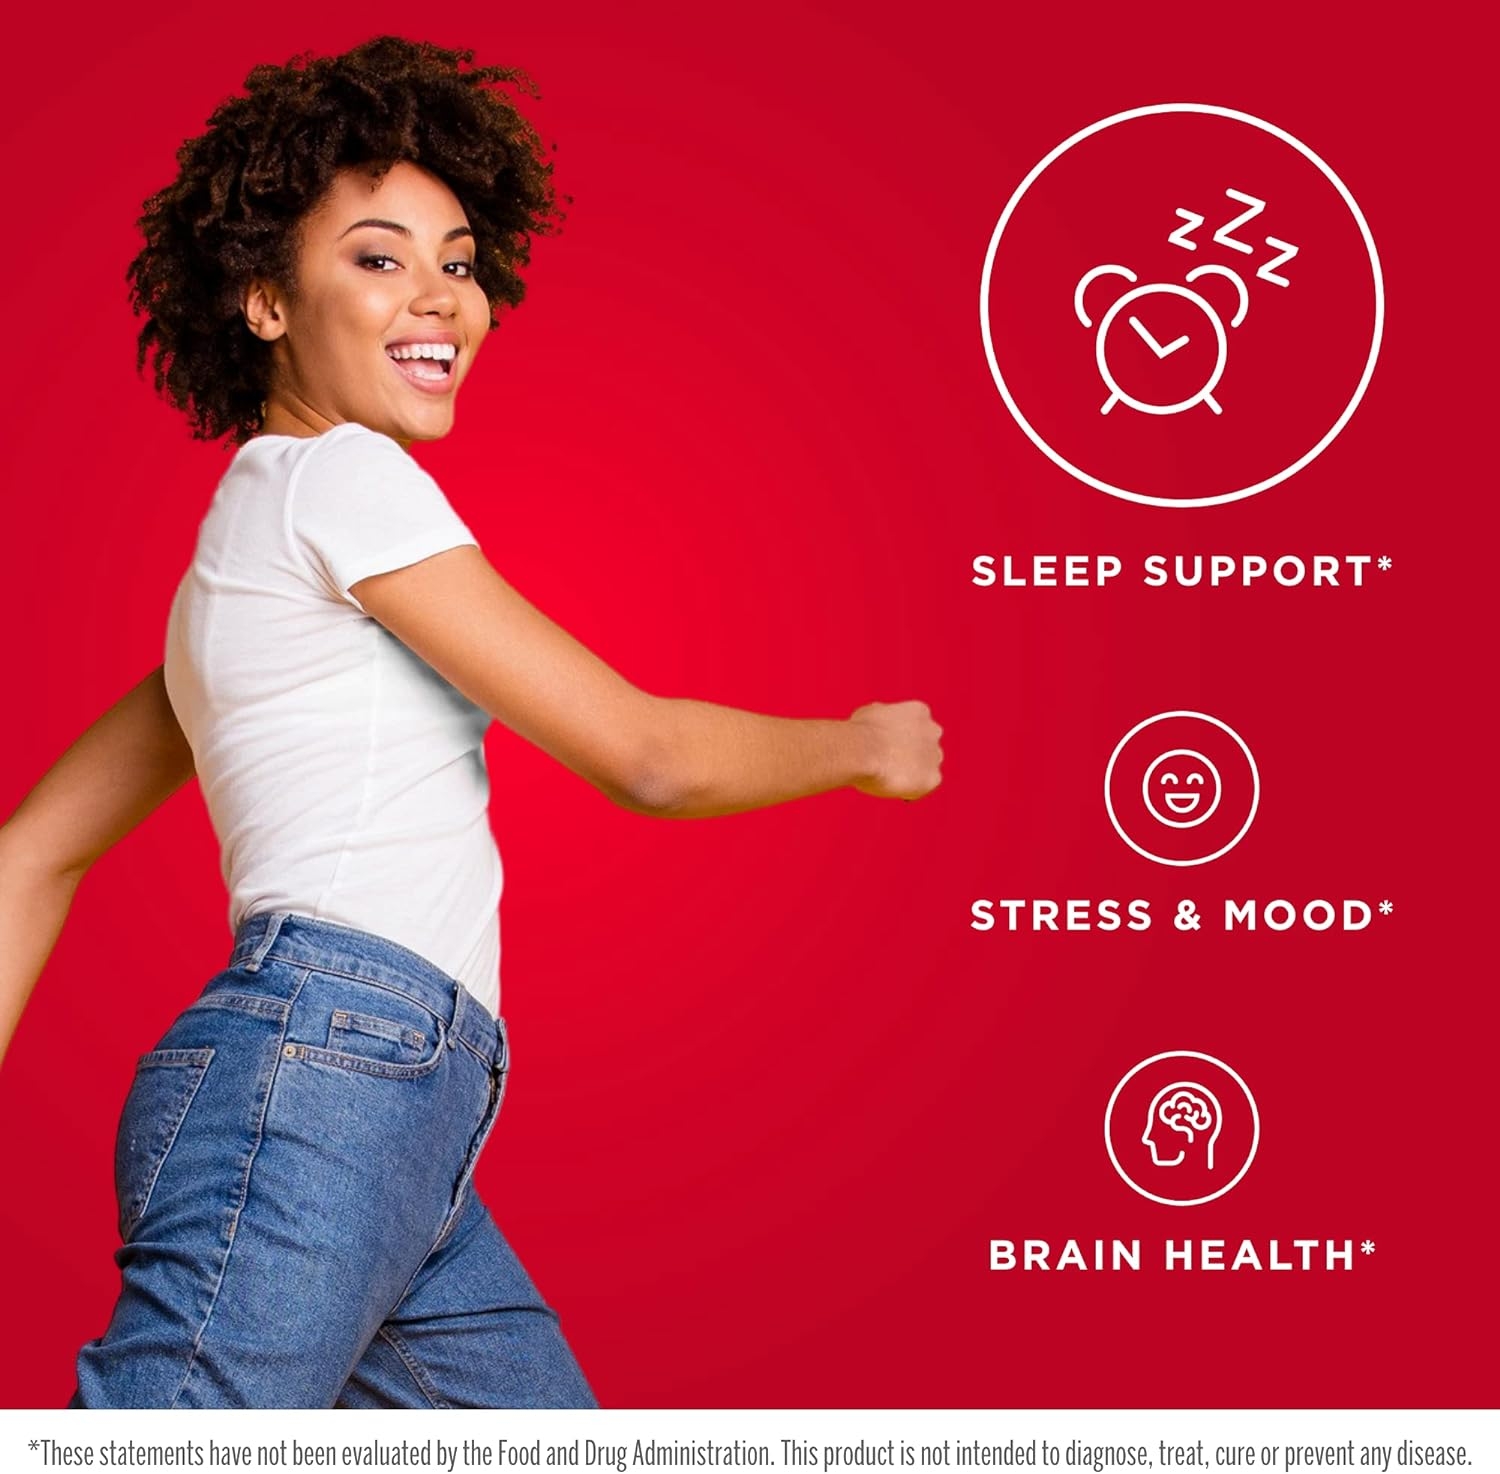 Jarrow Formulas Sleep Optimizer - 60 Veggie Caps - Promotes Healthy Sleep Cycle & Relaxation - Includes PharmaGABA, Hops Flower, Valerian, Melatonin & L-tryptophan - 30 Servings